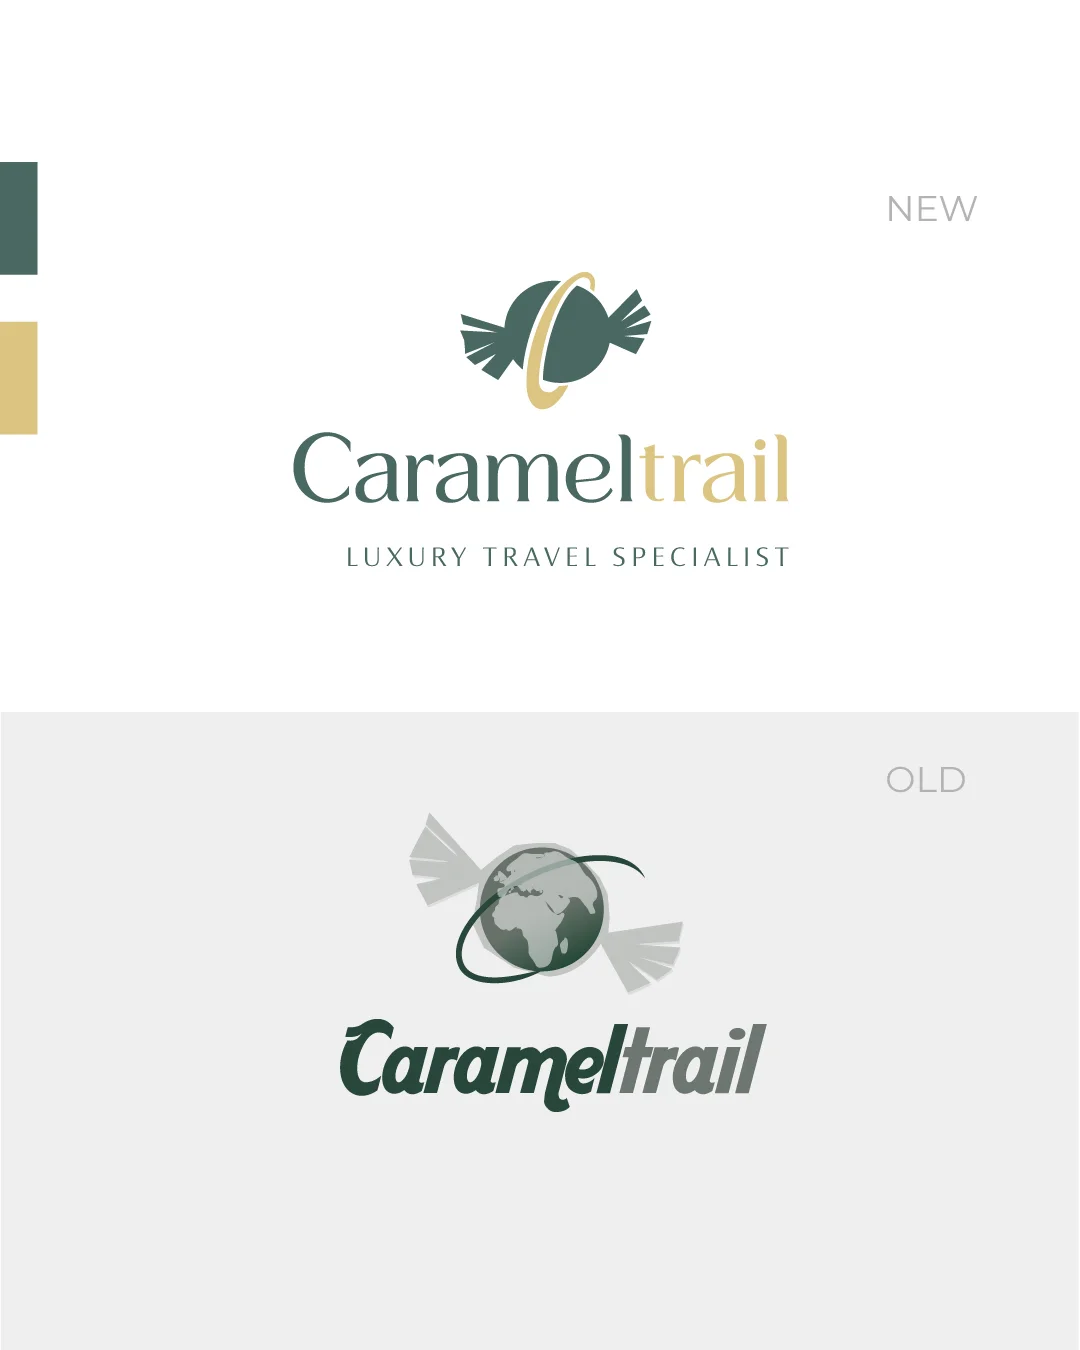 Rediseño de marca (rebranding) para la Carameltrail